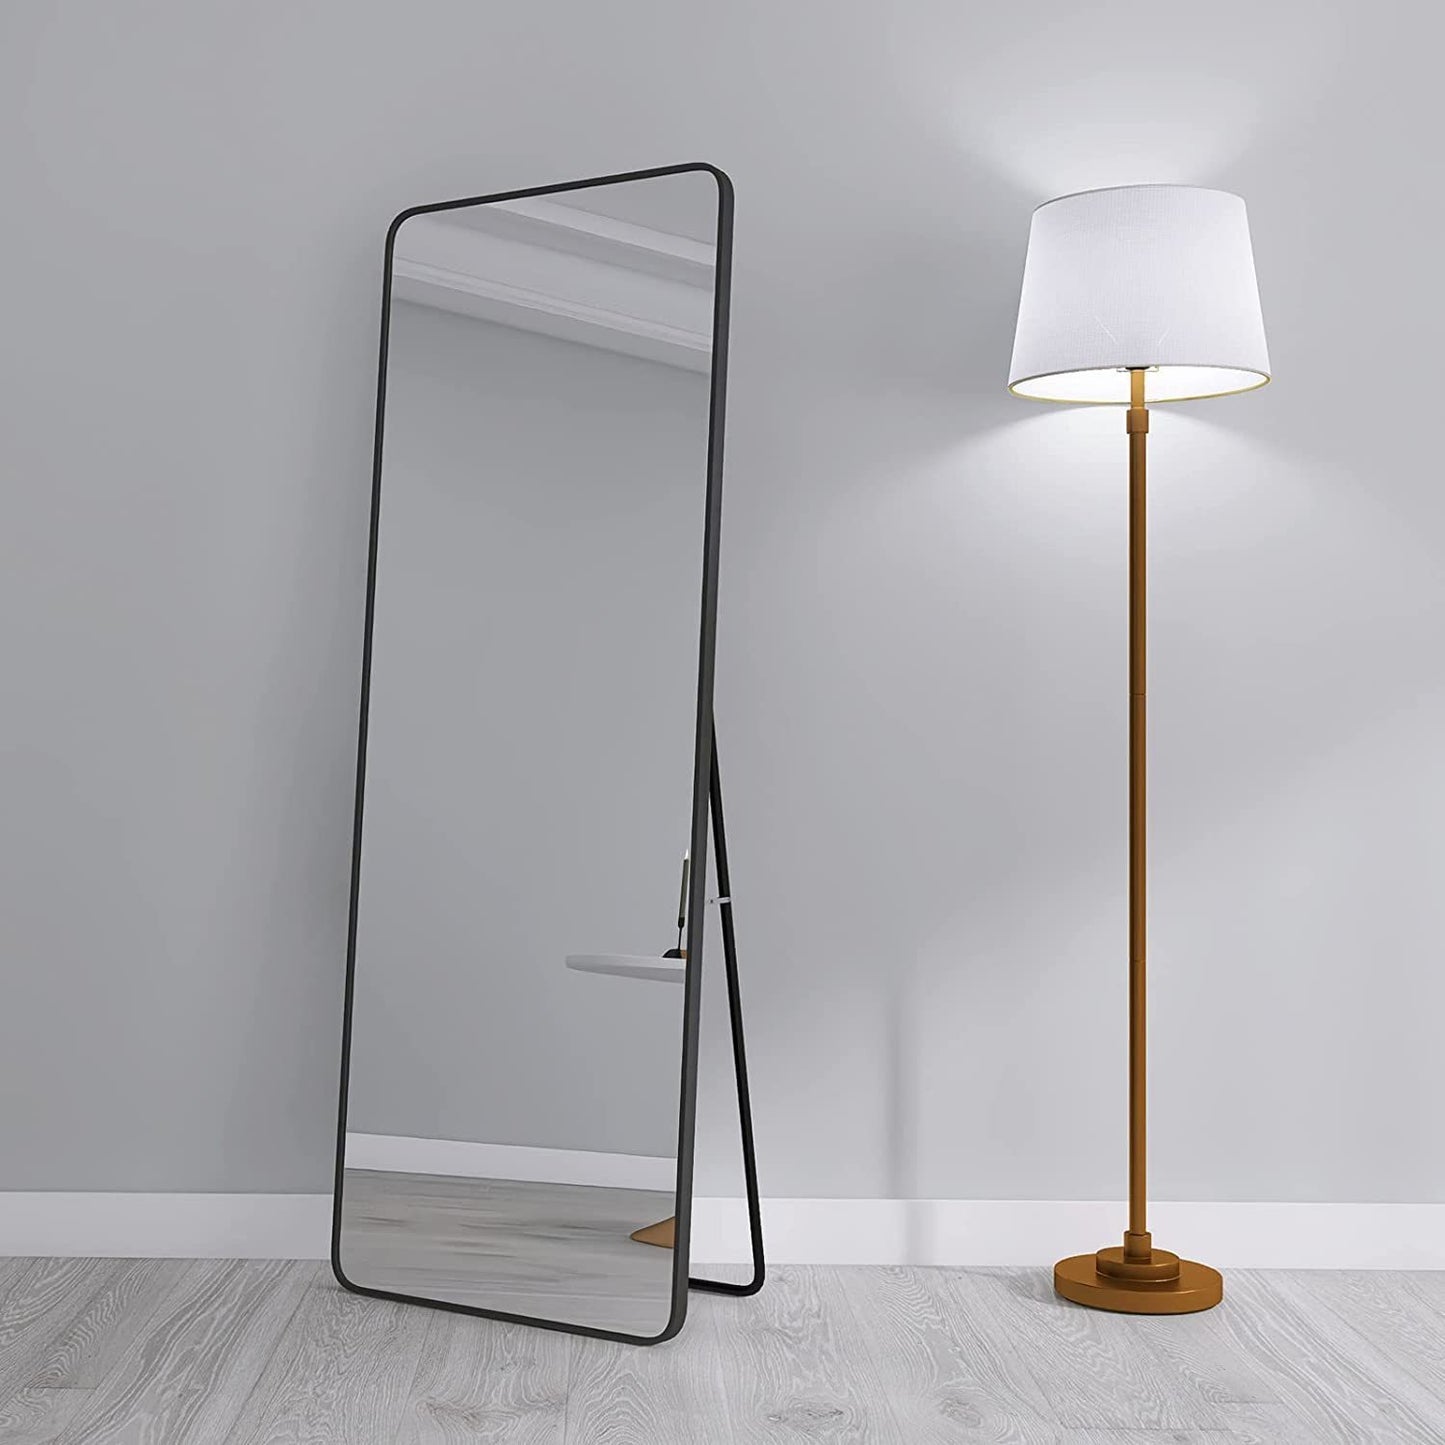 Full-Length Mirror 63"x20", Round Corner Aluminum Alloy Frame Floor Full Body Large Mirror, Stand or Leaning Against Wall for Living Room or Bedroom, Black